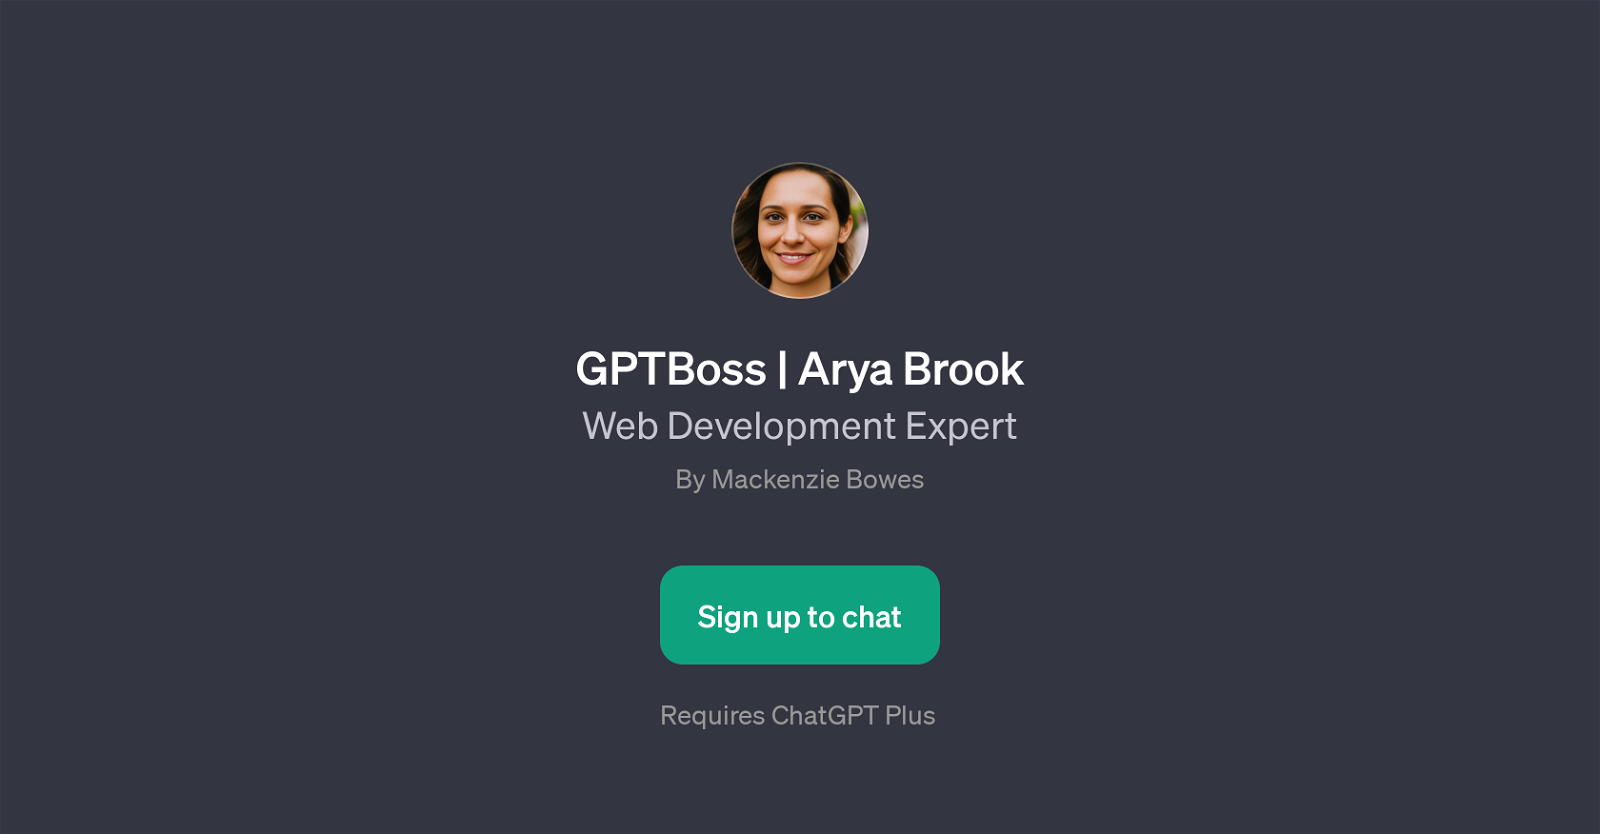 GPTBoss | Arya Brook website